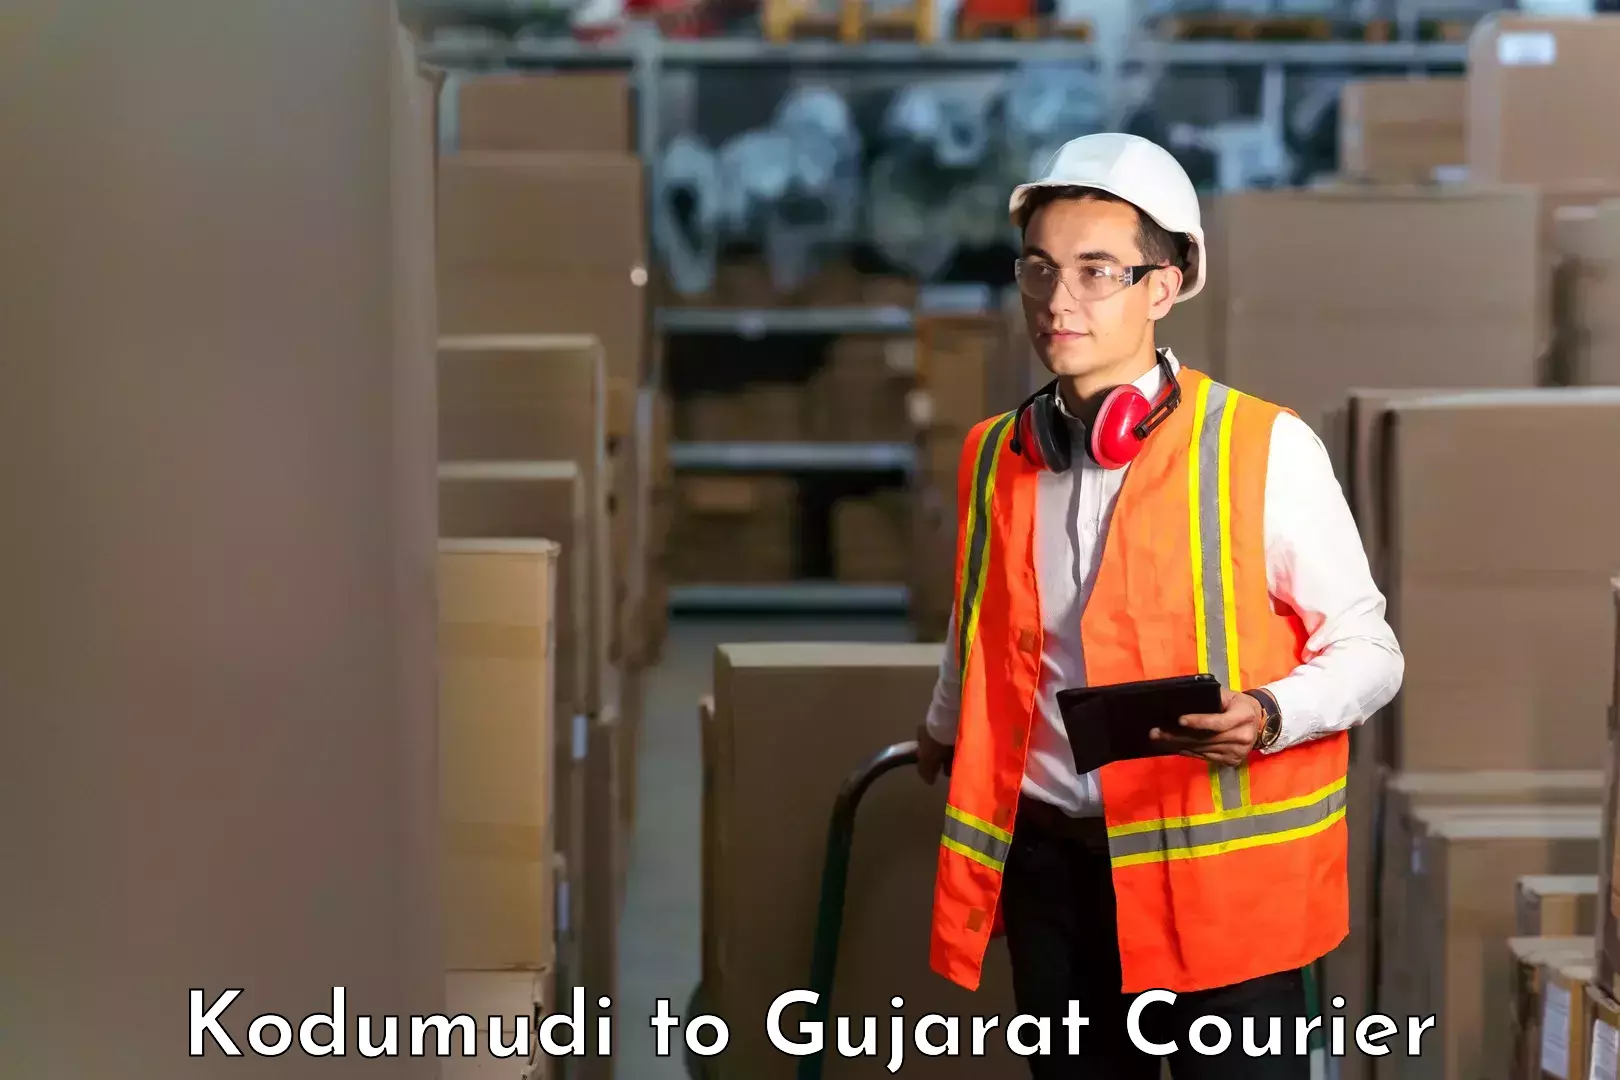 Professional courier handling Kodumudi to Rajkot